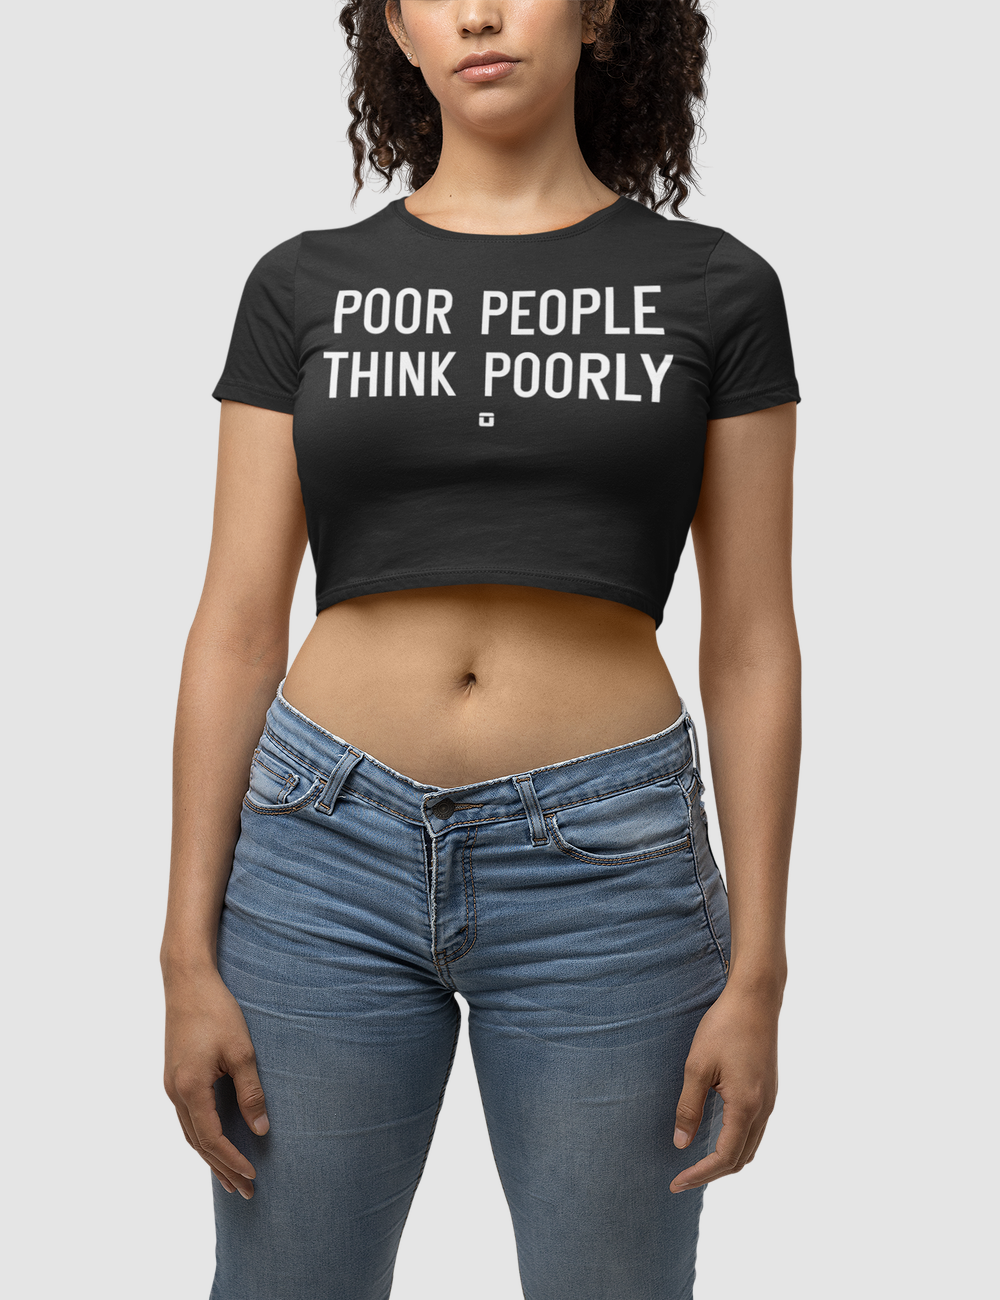 Poor People Think Poorly Women's Fitted Crop Top T-Shirt OniTakai